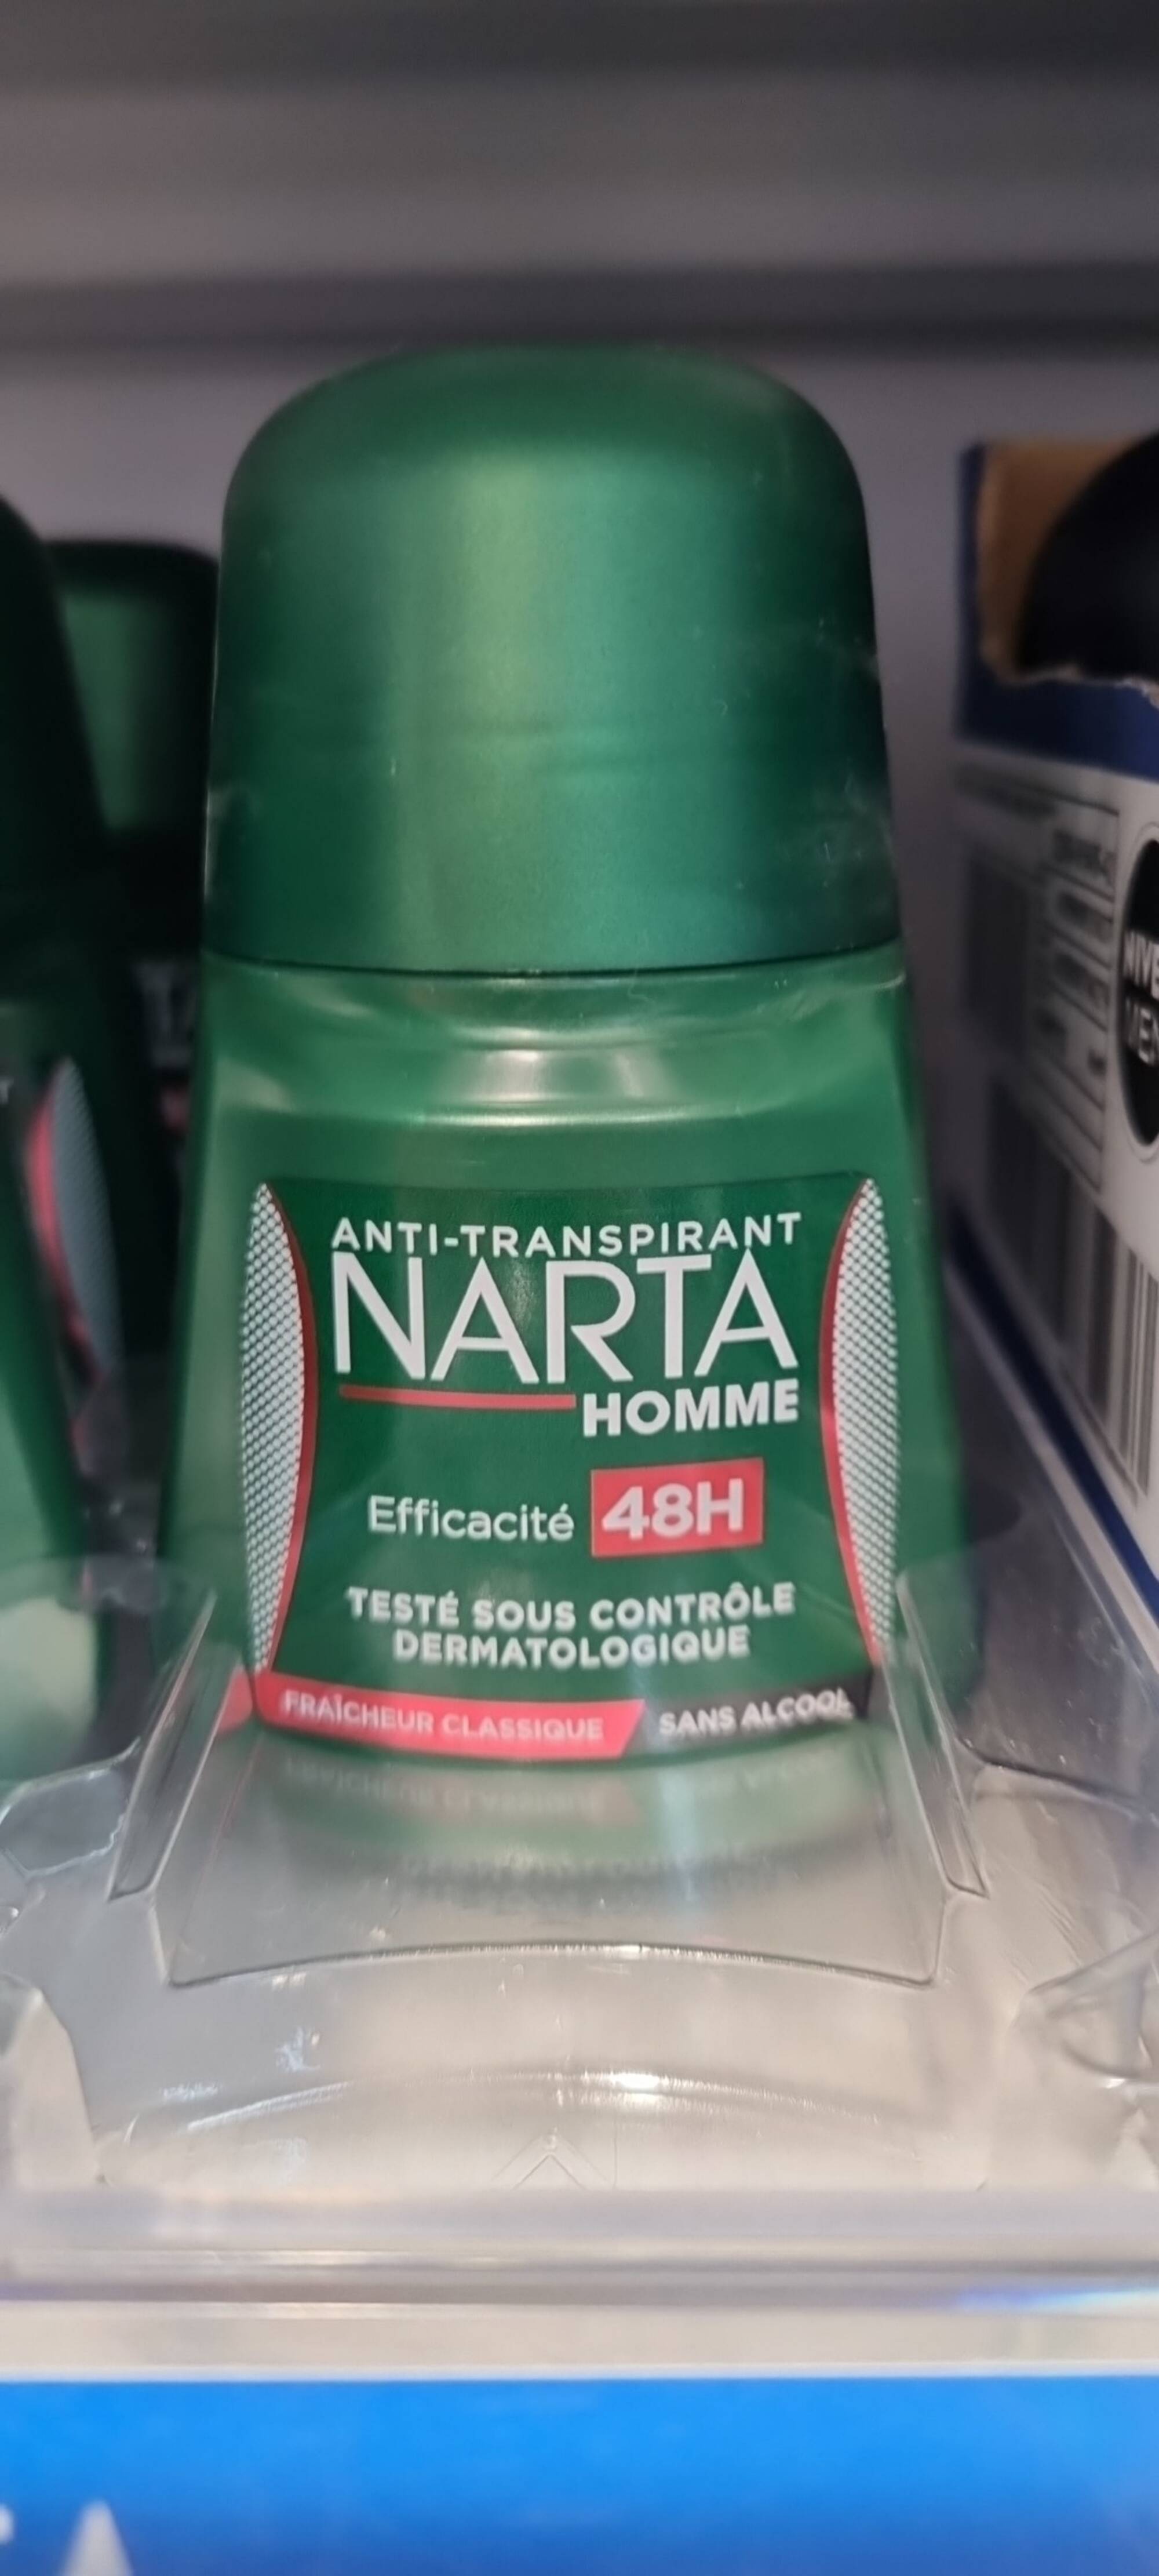 NARTA - Anti-transpirant homme éfficacité 48h